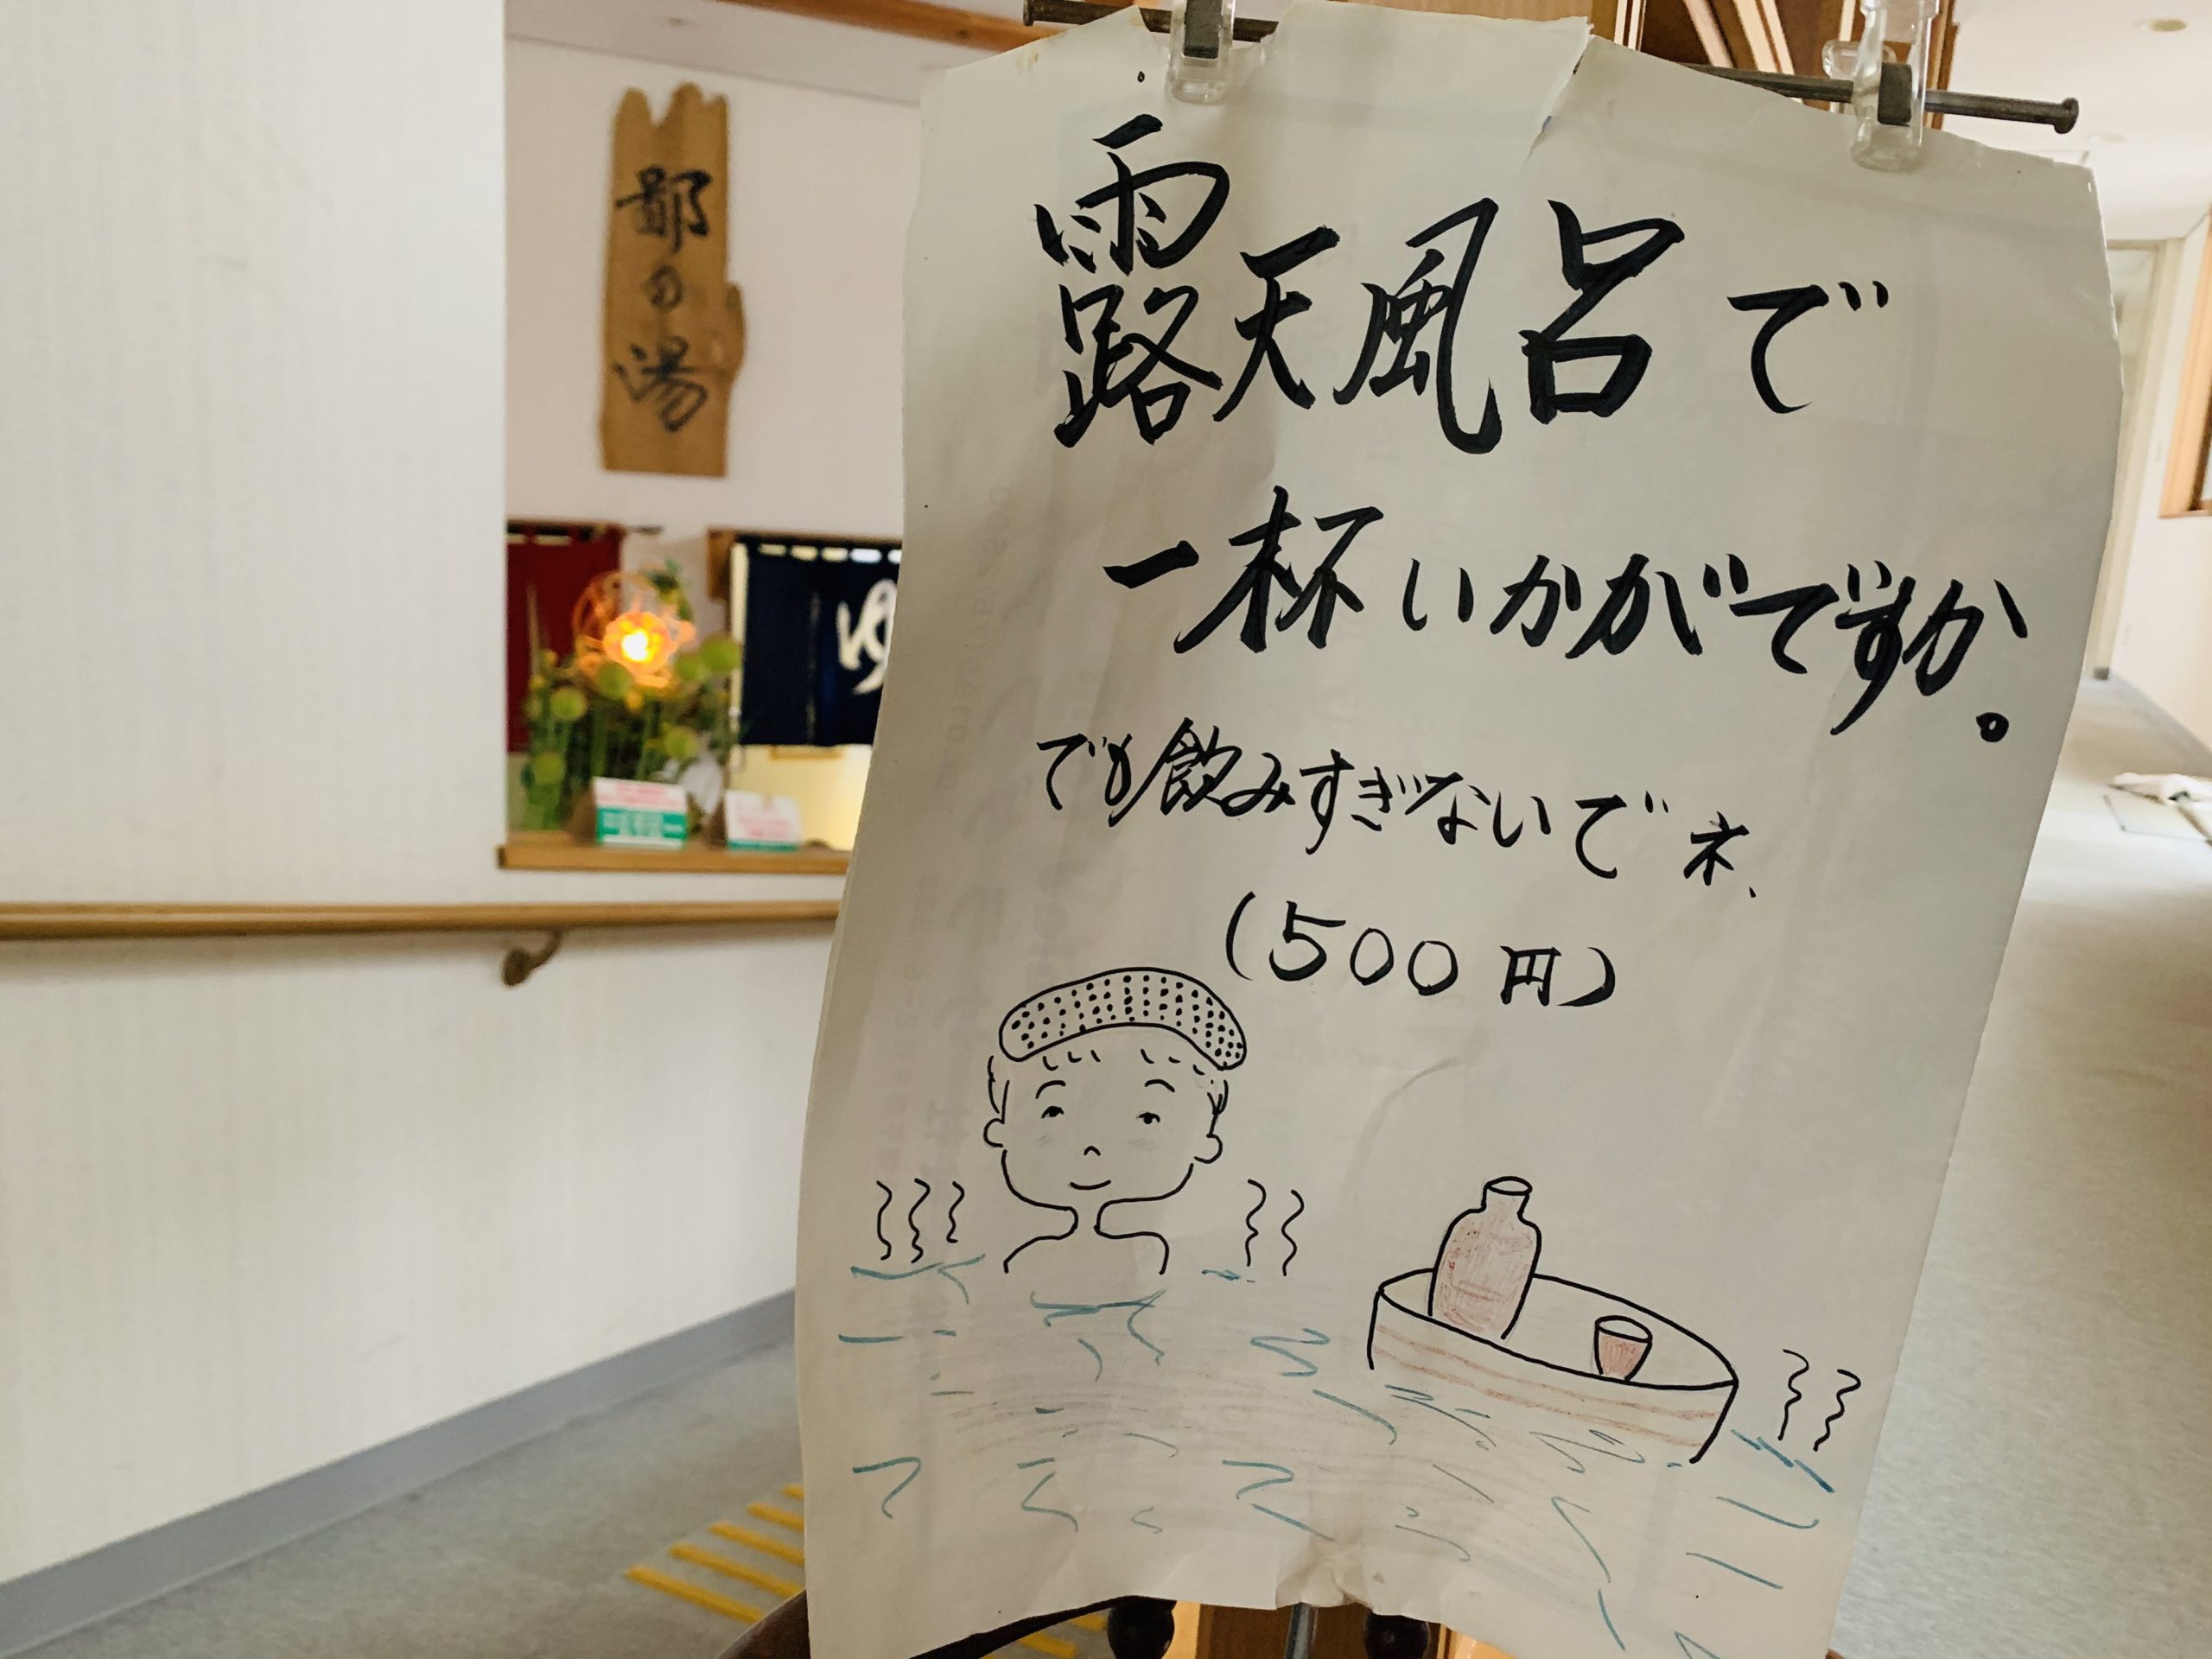 Announcing: the Sake-lovers Dream Tour of Hachimantai